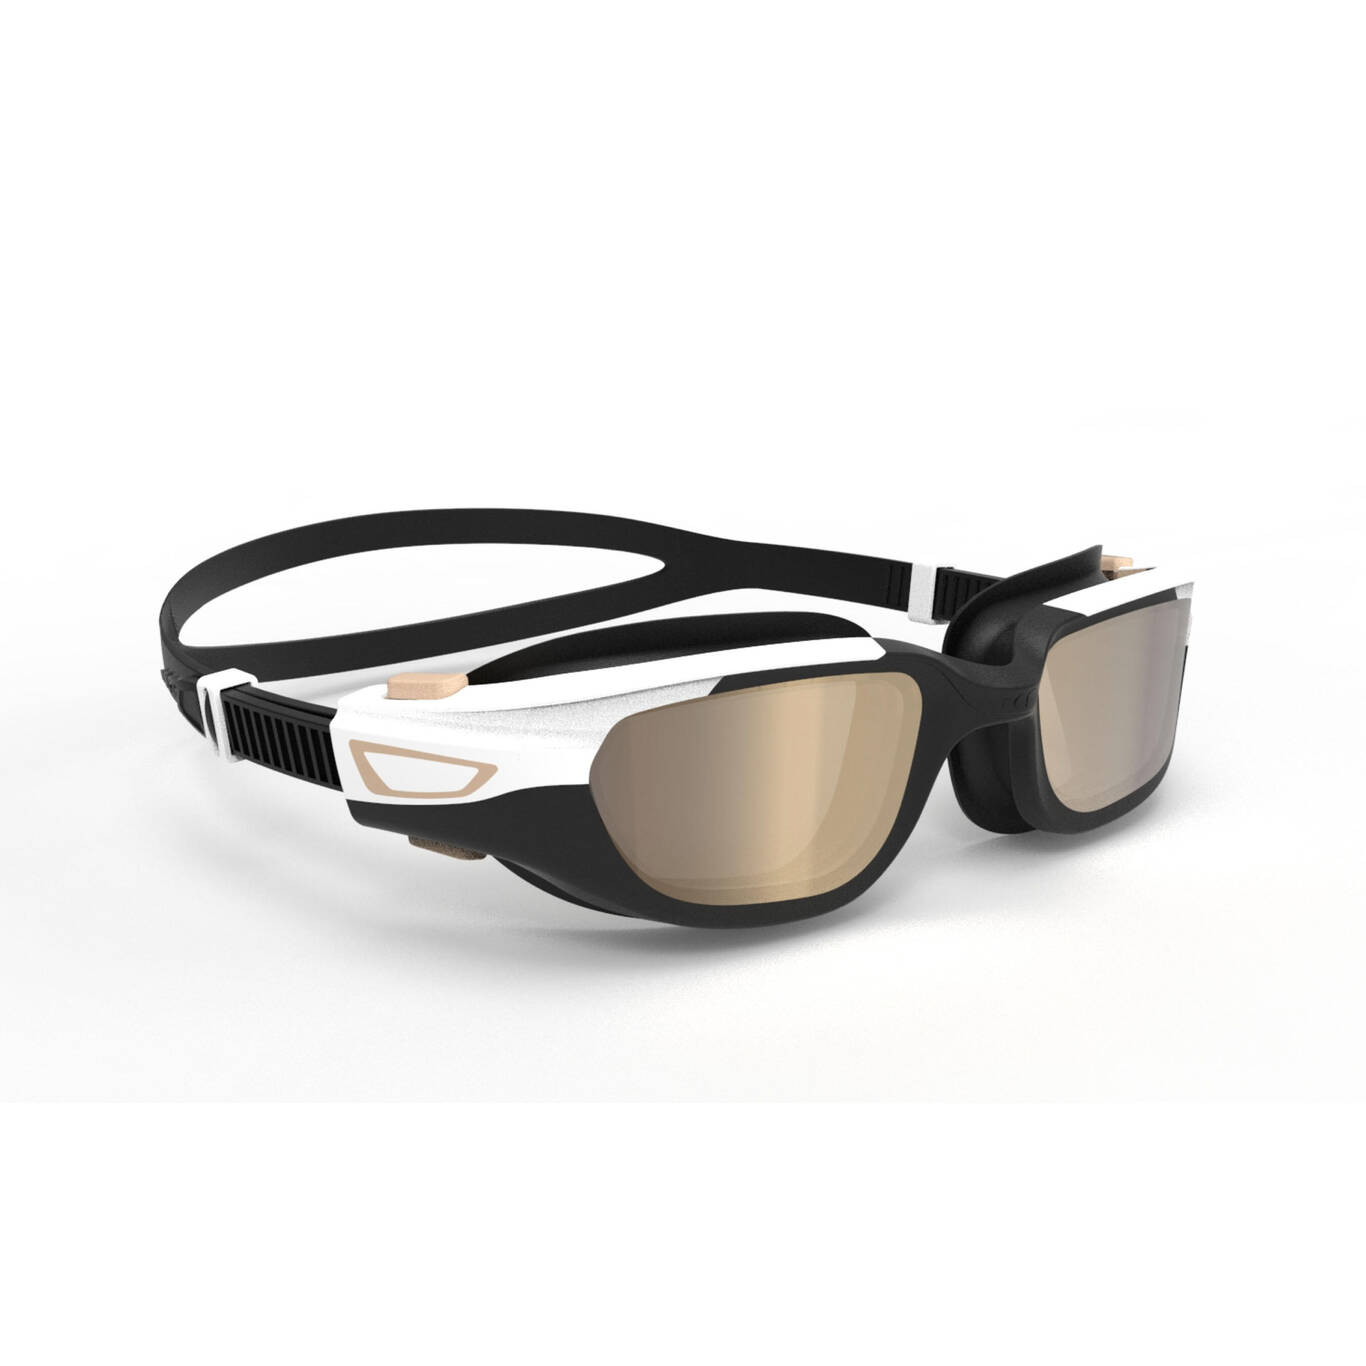 SPIRIT 500 Adult Swimming Goggles Mirrored Lenses - Black / White / Beige